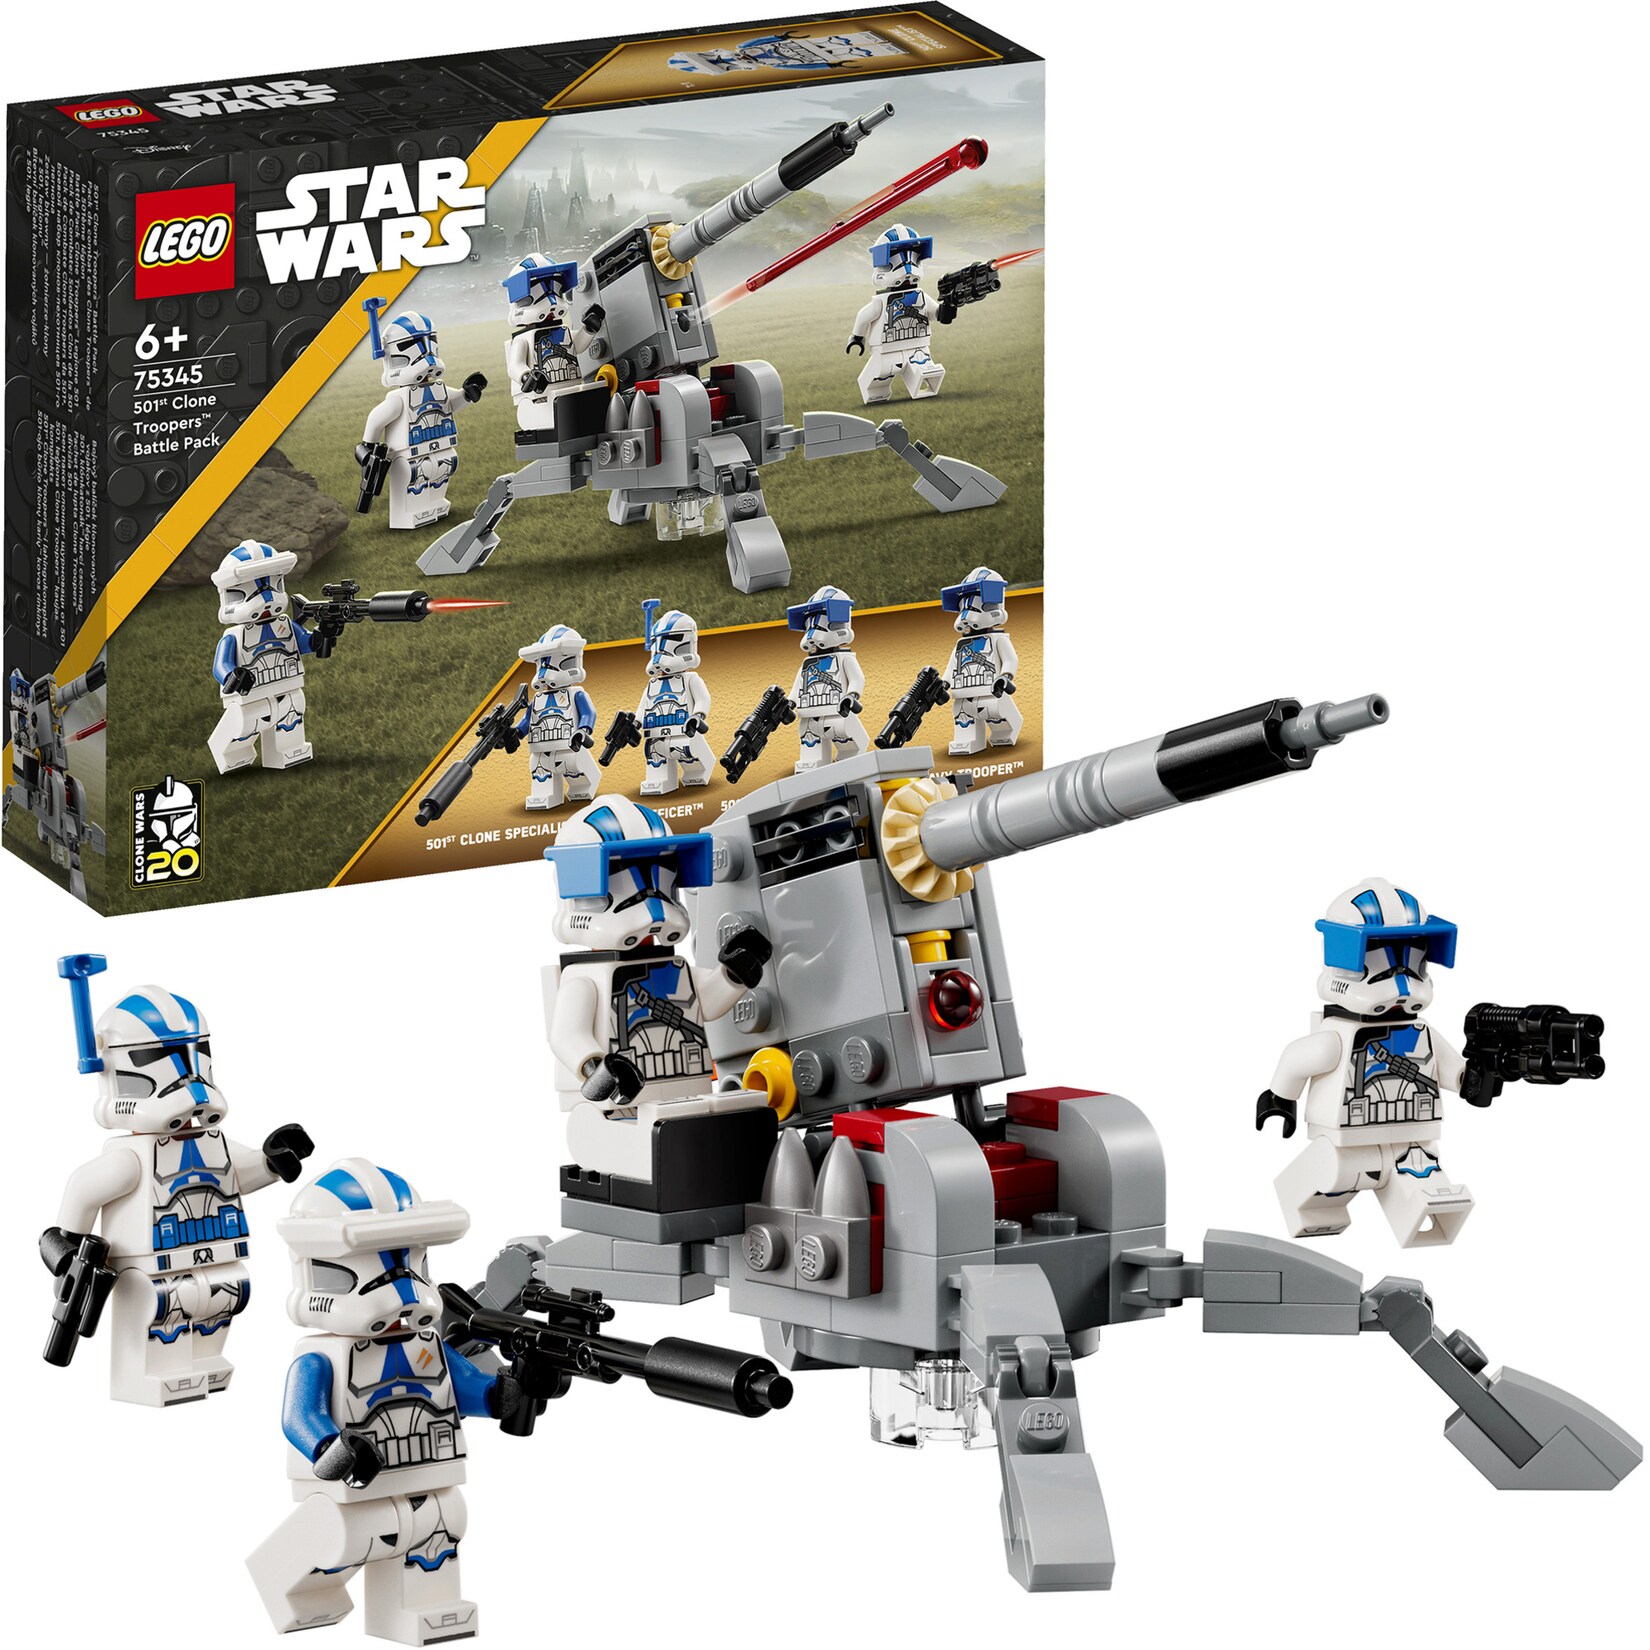 LEGO Konstruktionsspielzeug Star Wars 501st Clone Troopers Battle Pack